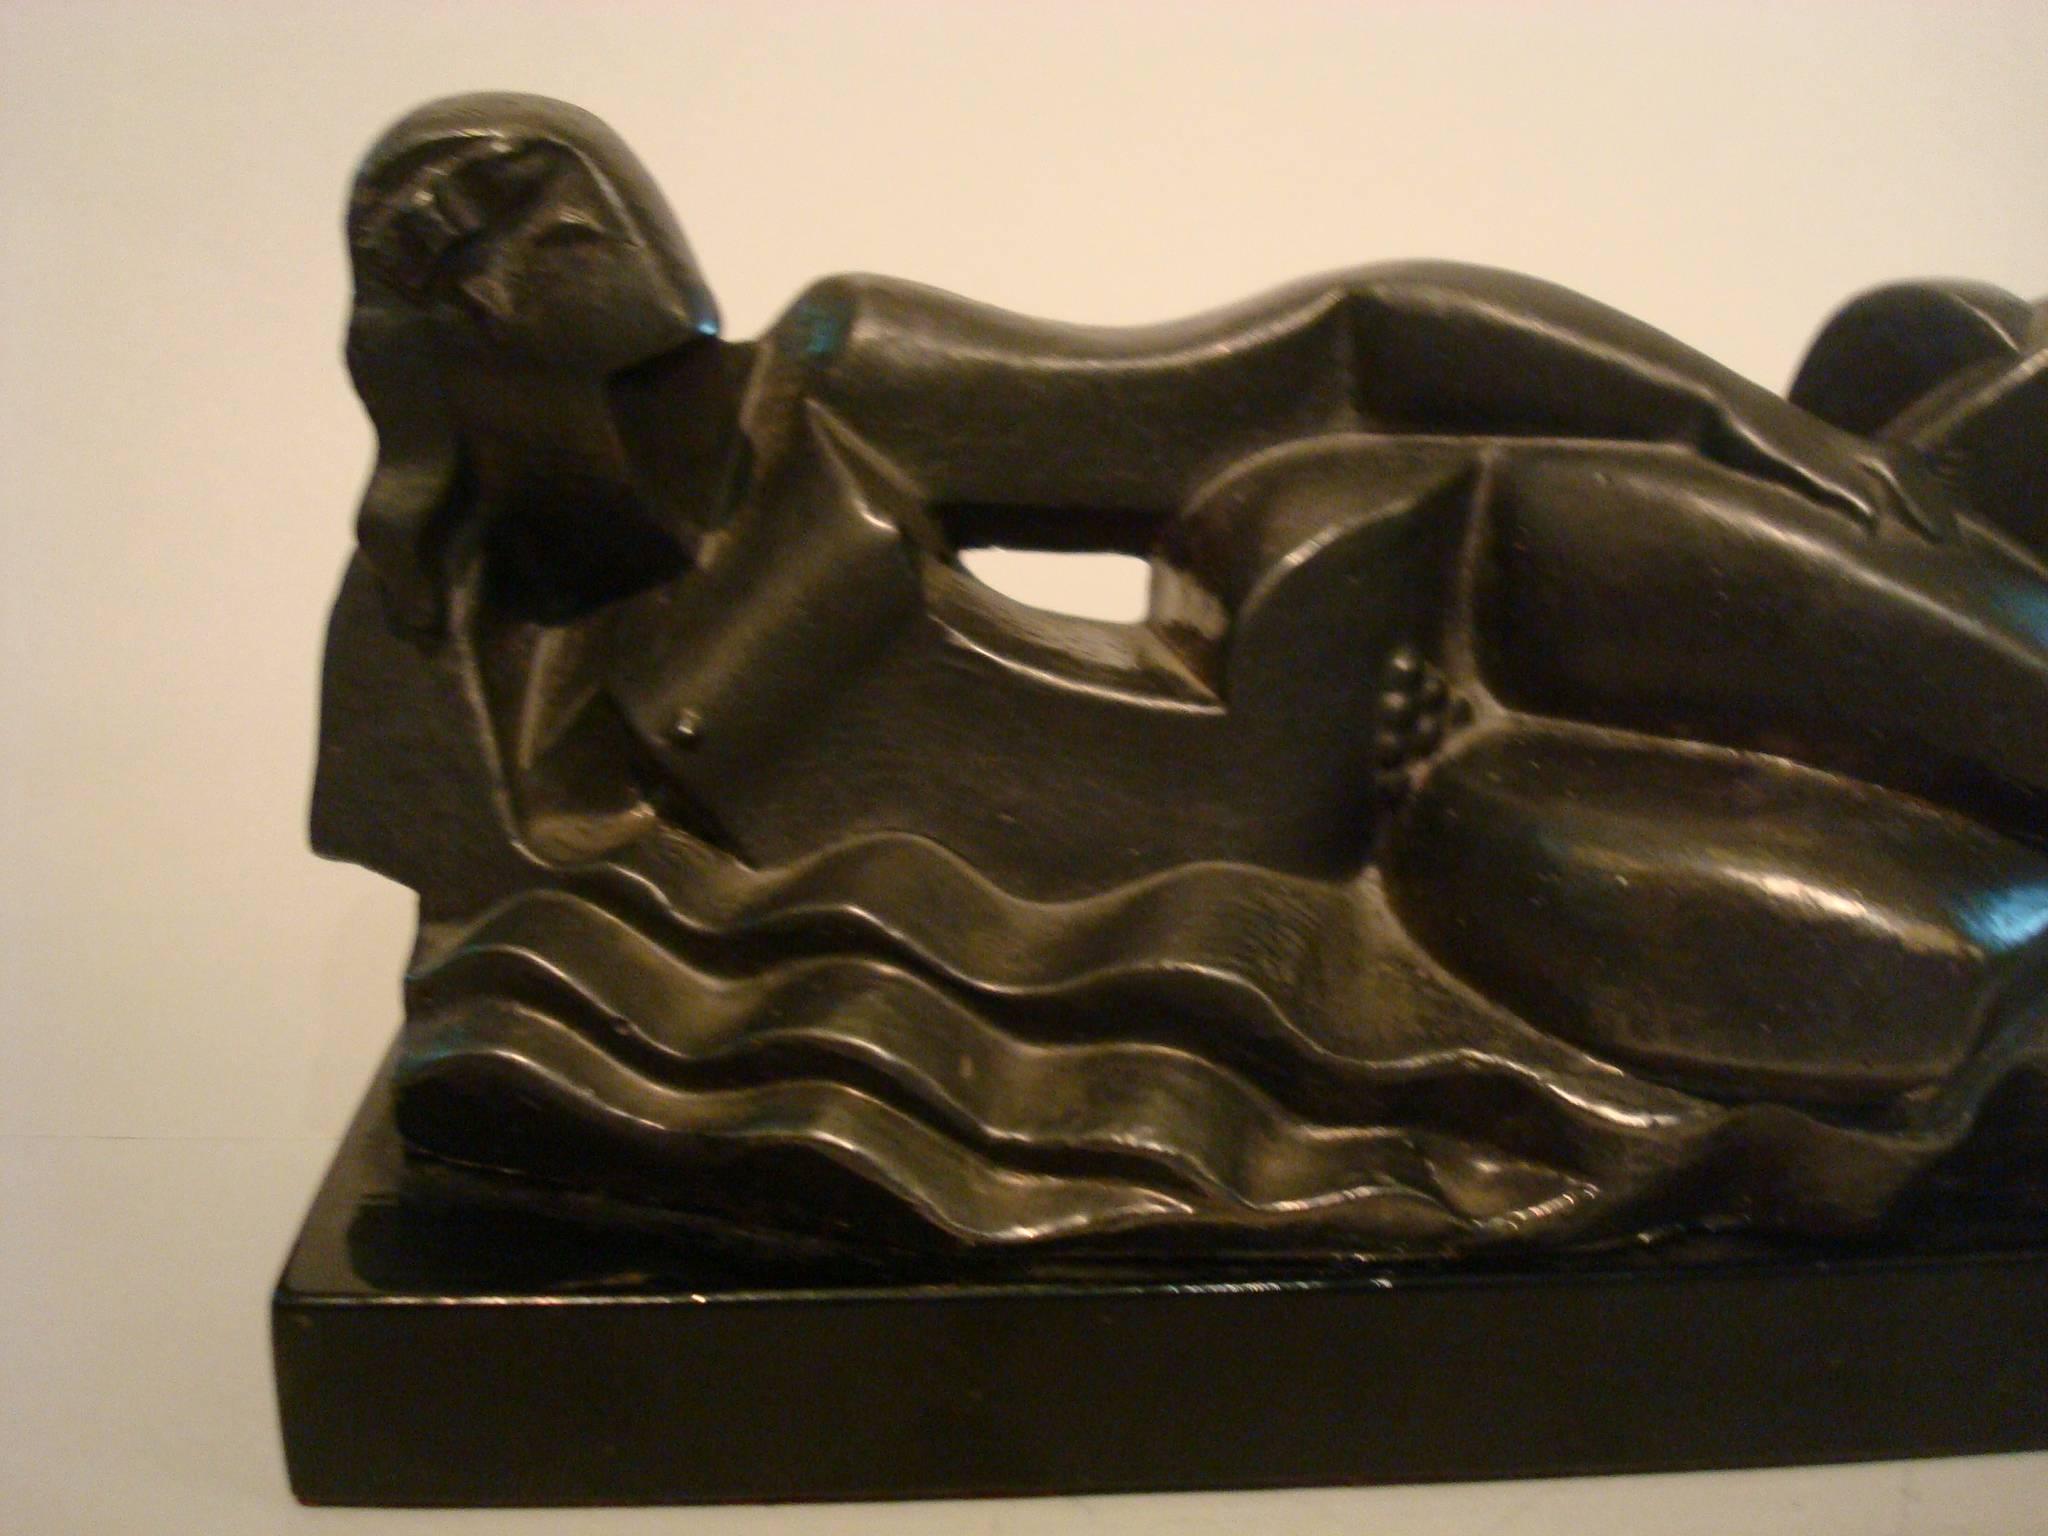 Argentine Art Deco, Cubist Lying Women Sculpture by Pablo Curatella Manes, 1920s